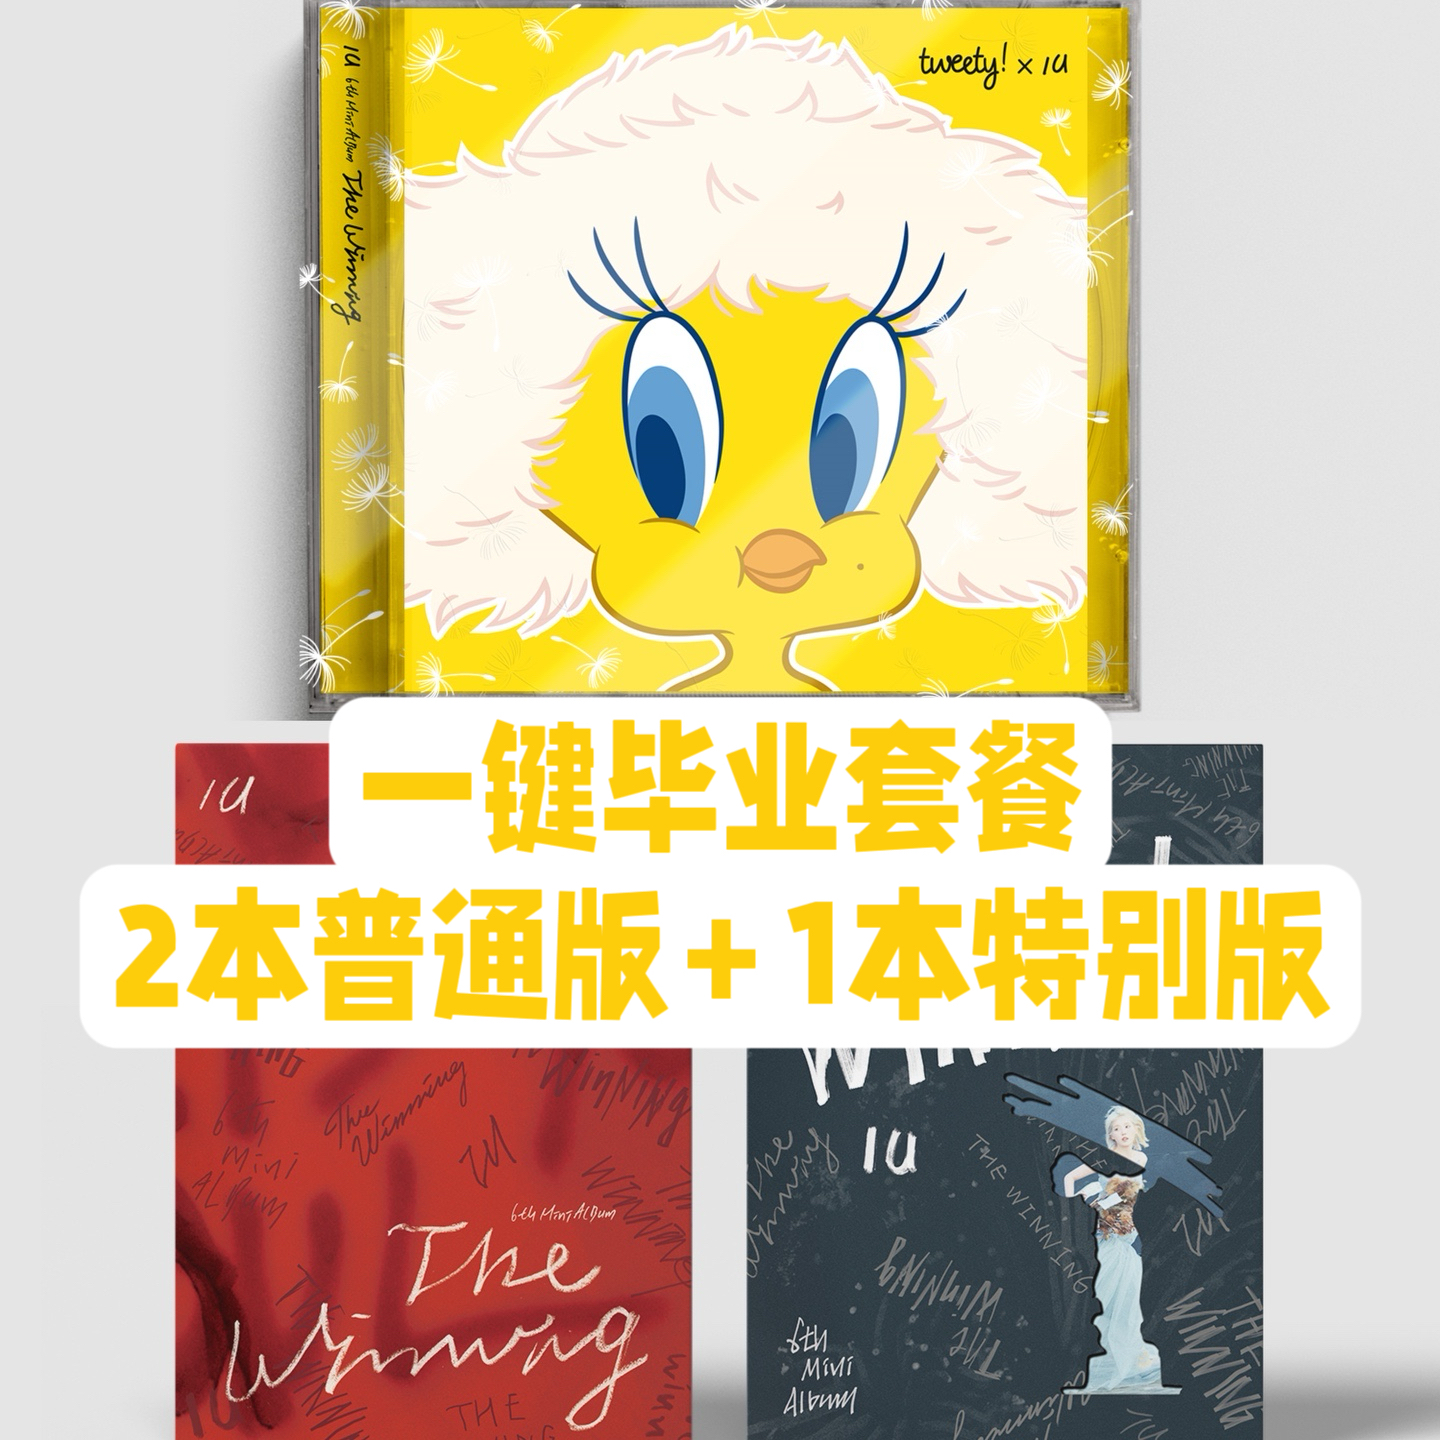 [全款 裸专][一键毕业] [3CD] IU - 6th Mini Album [The Winning] (I WIN Ver. + U WIN Ver. + Special Ver.) _两站联合